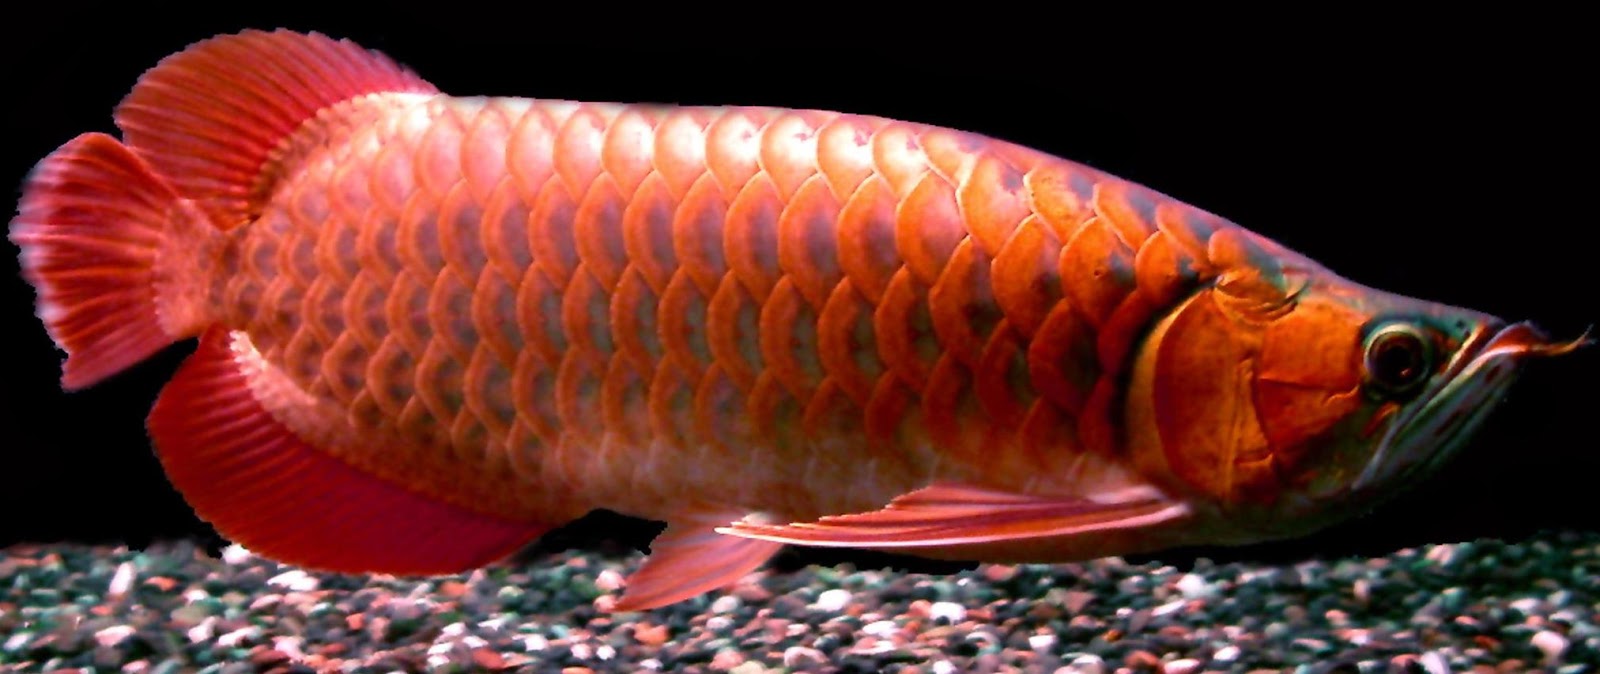 Menjaga Warna Merah pada Ikan Arwana Super Red - BERBAGI PENGETAHUAN